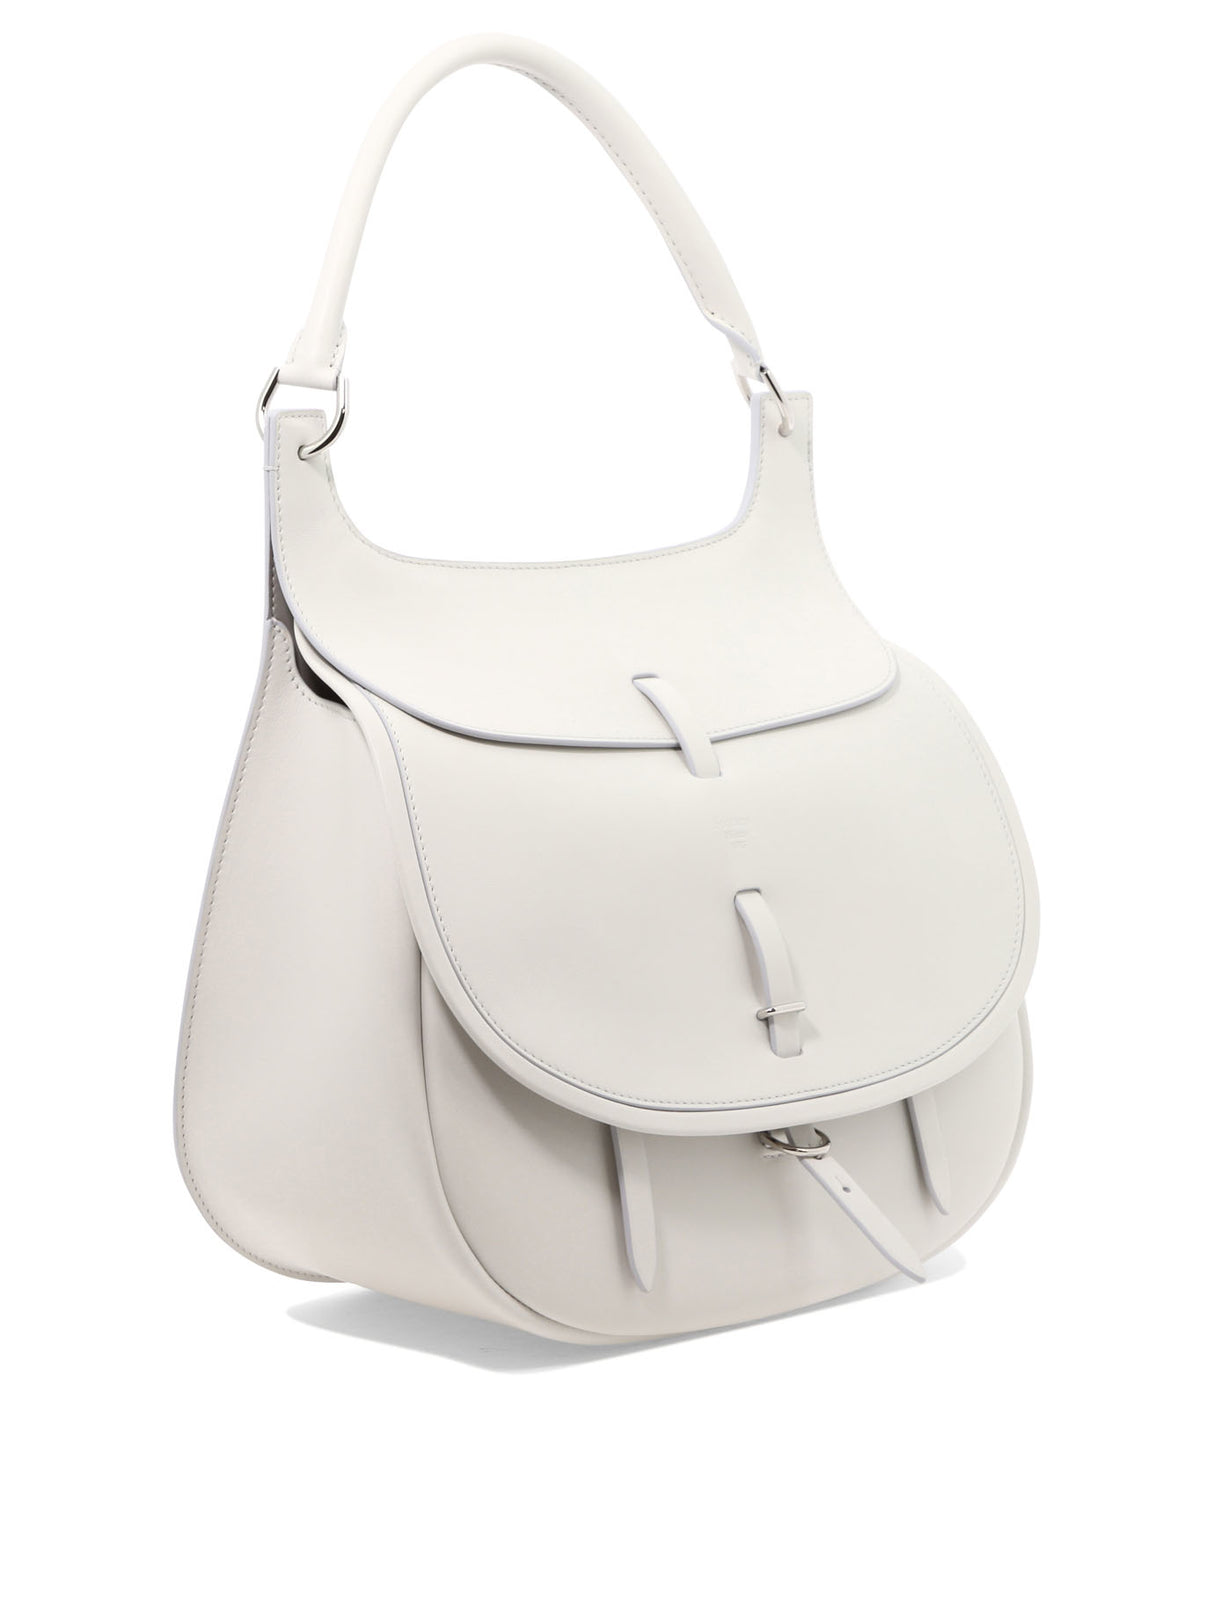 FONTANA MILANO 1915 White Chelsea Media Shoulder Handbag for Women - SS23 Collection